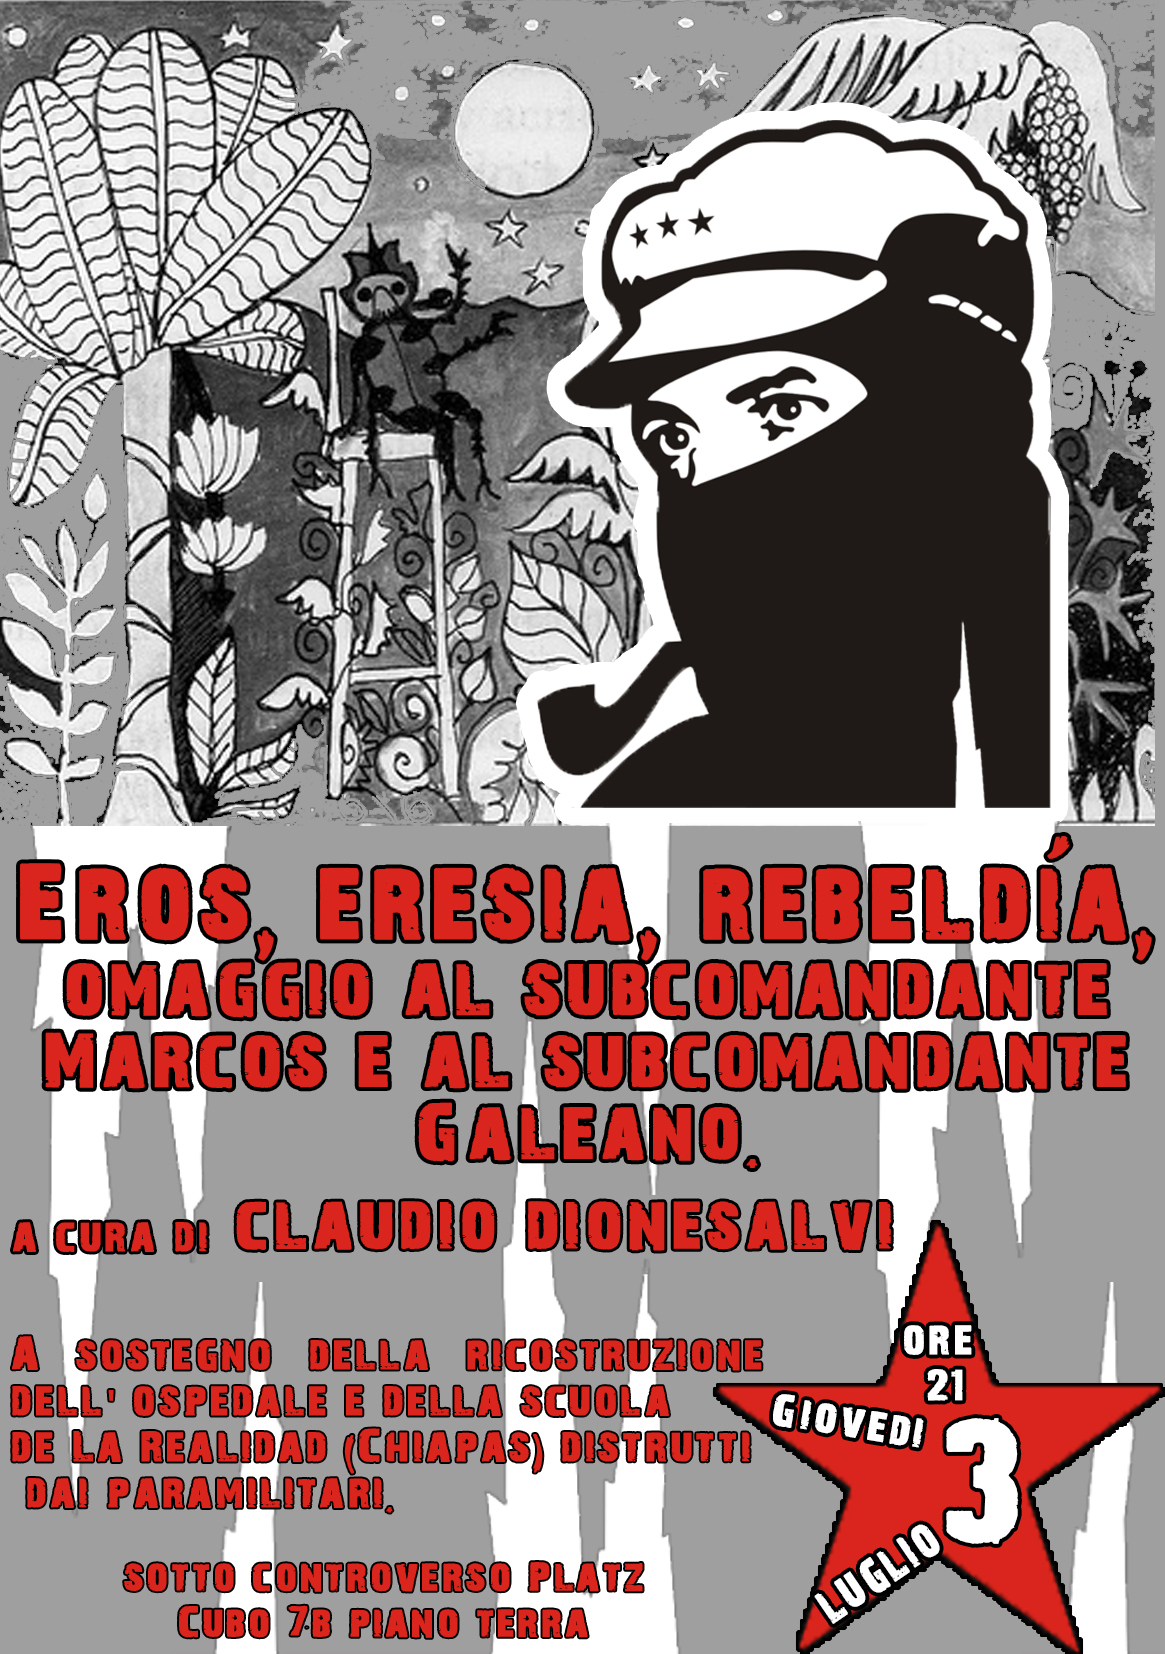 - EROS, ERESIA, REBELDIA, reading a sostegno dell'autonomia zapatista